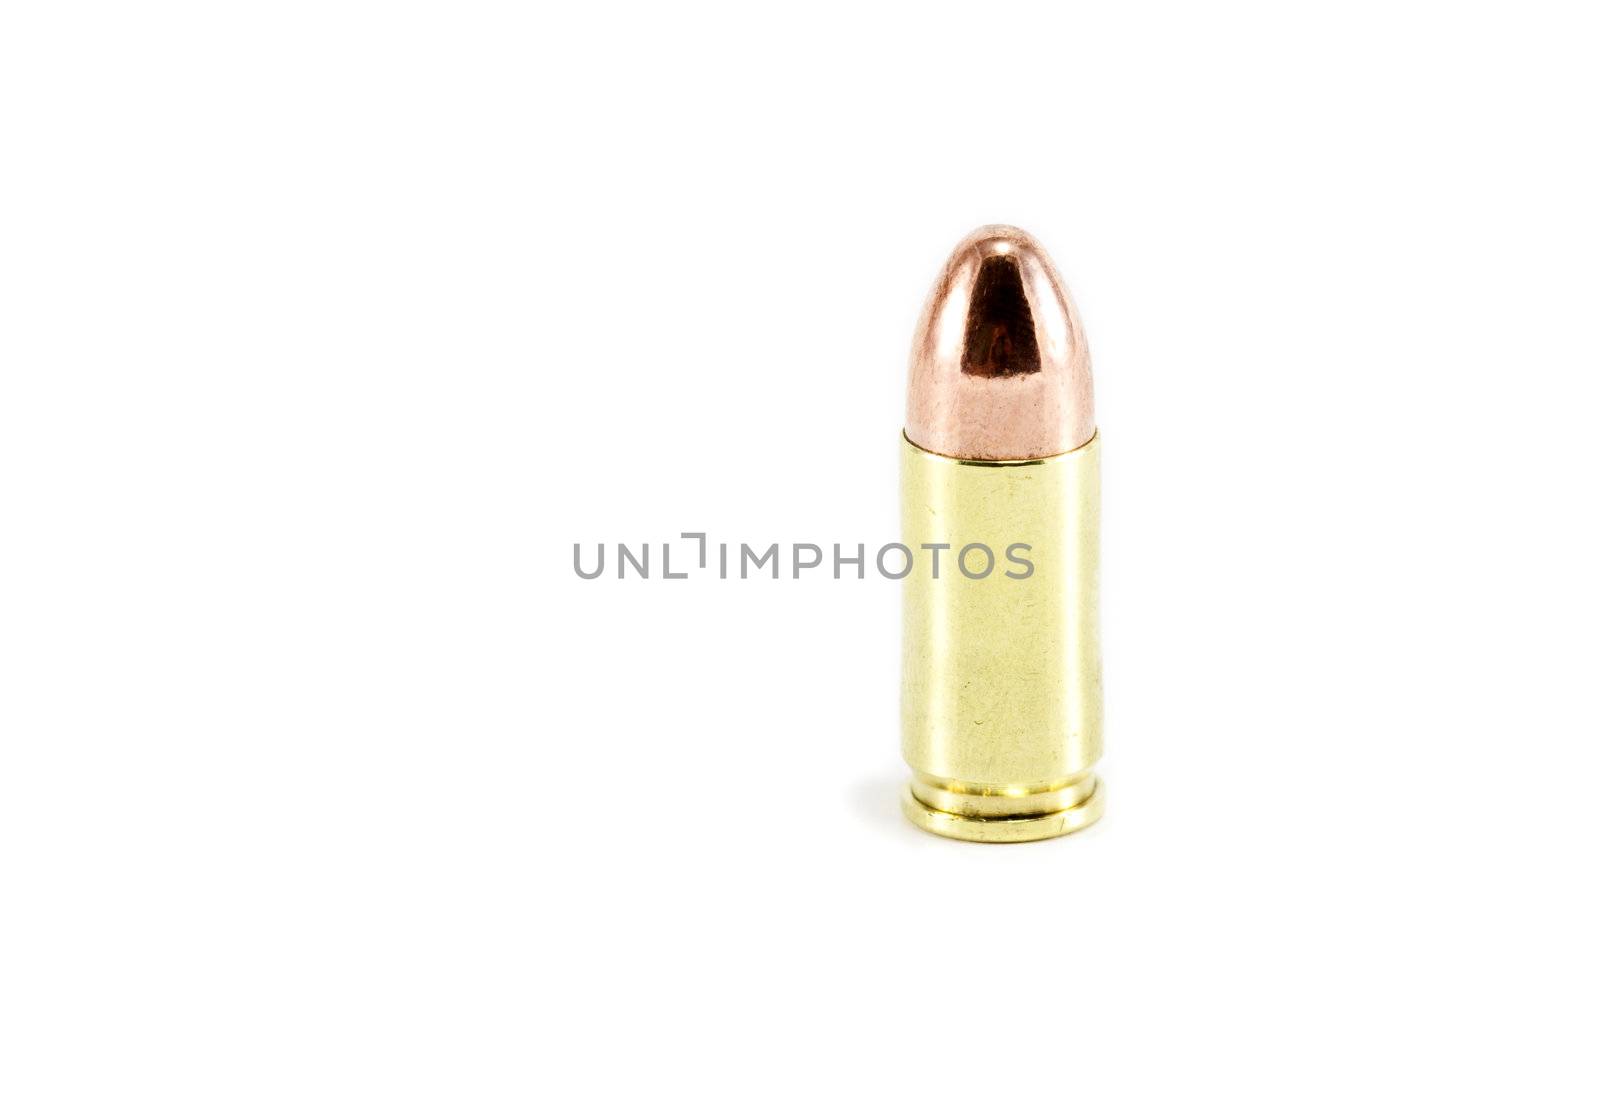 A single 9mm bullet